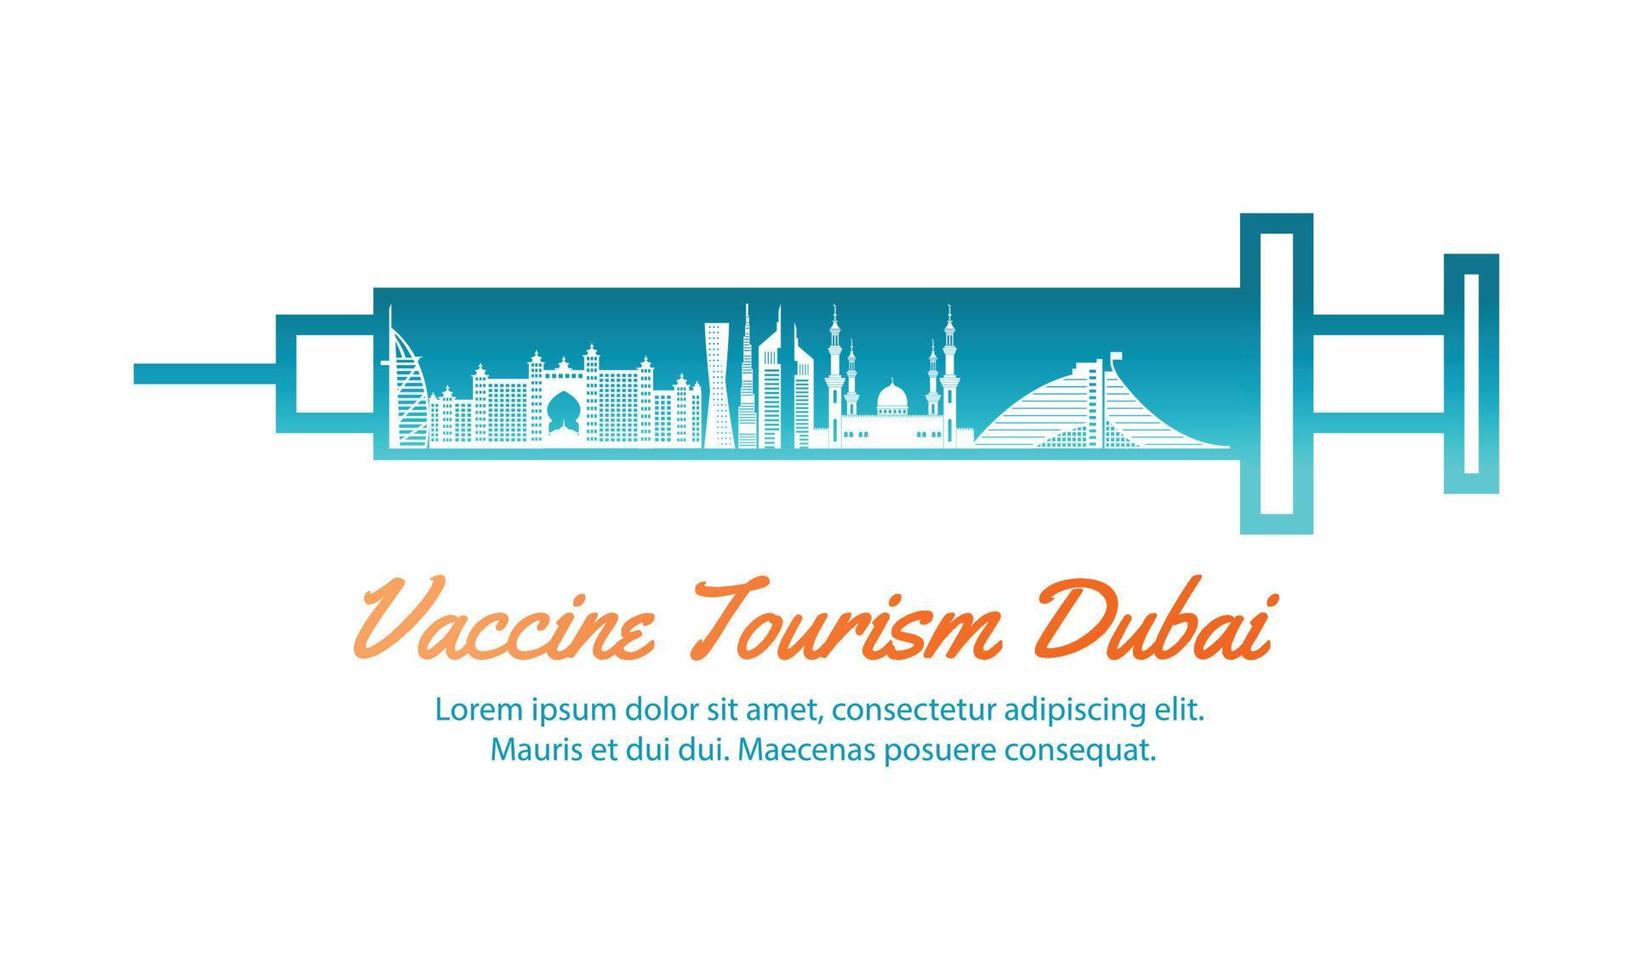 Concept travel art of vaccine tourism of Dubai vector